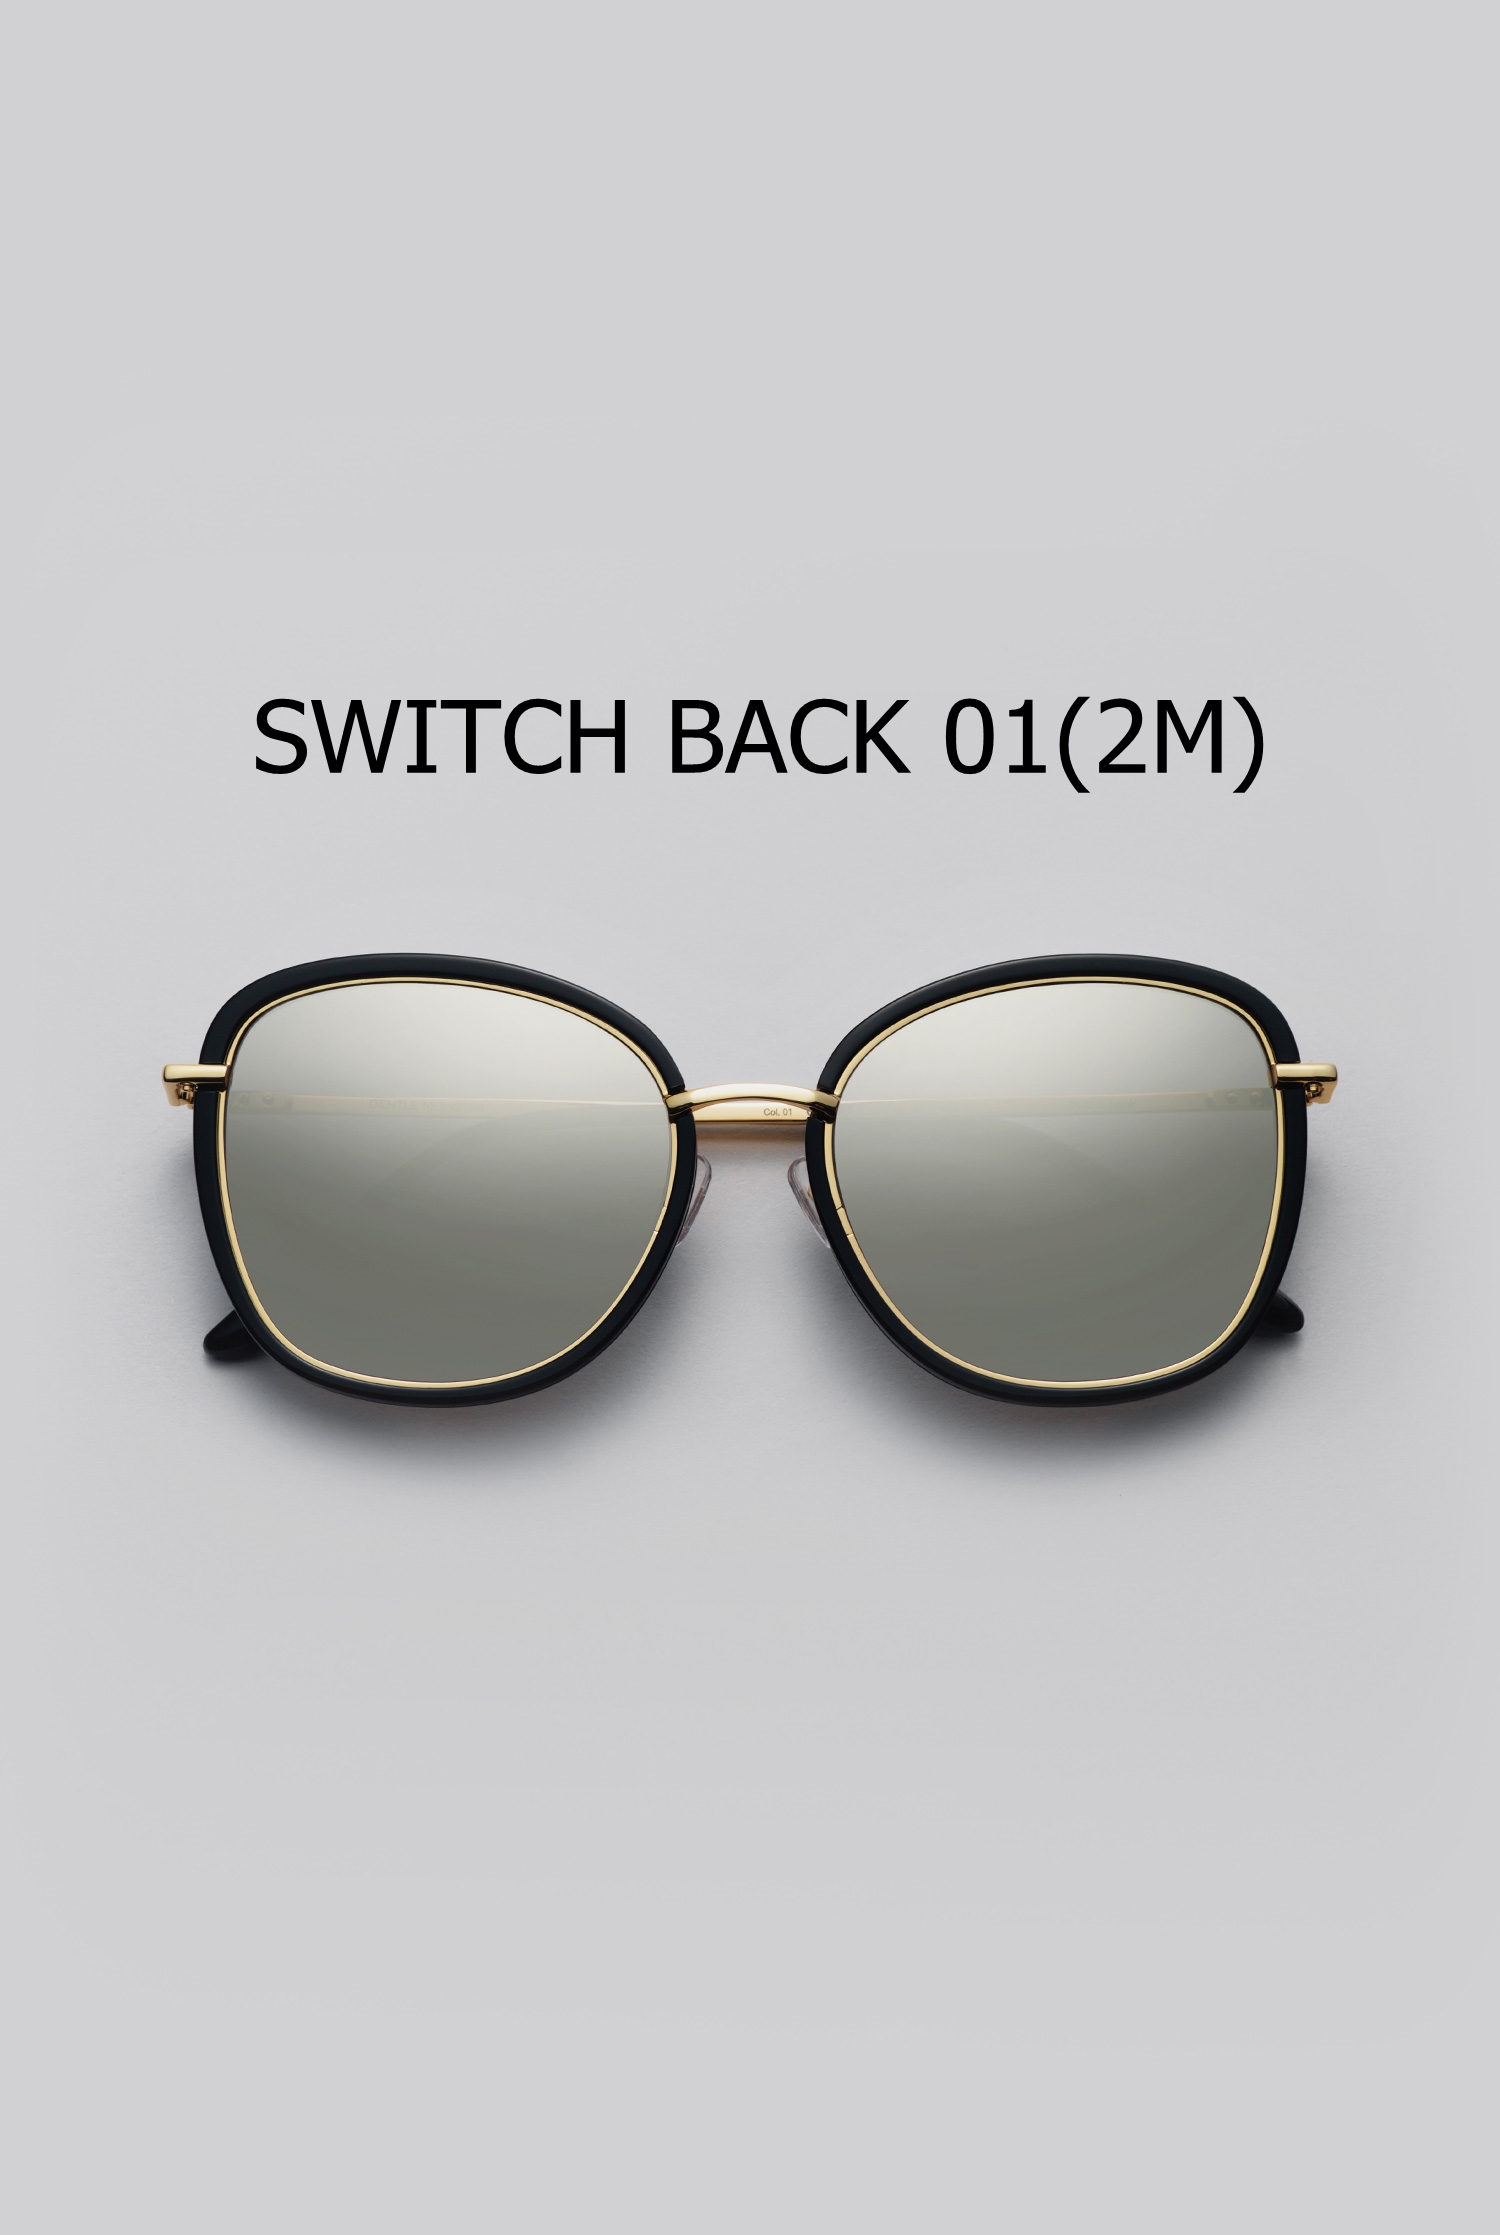 SWITCH BACK 01(2M)